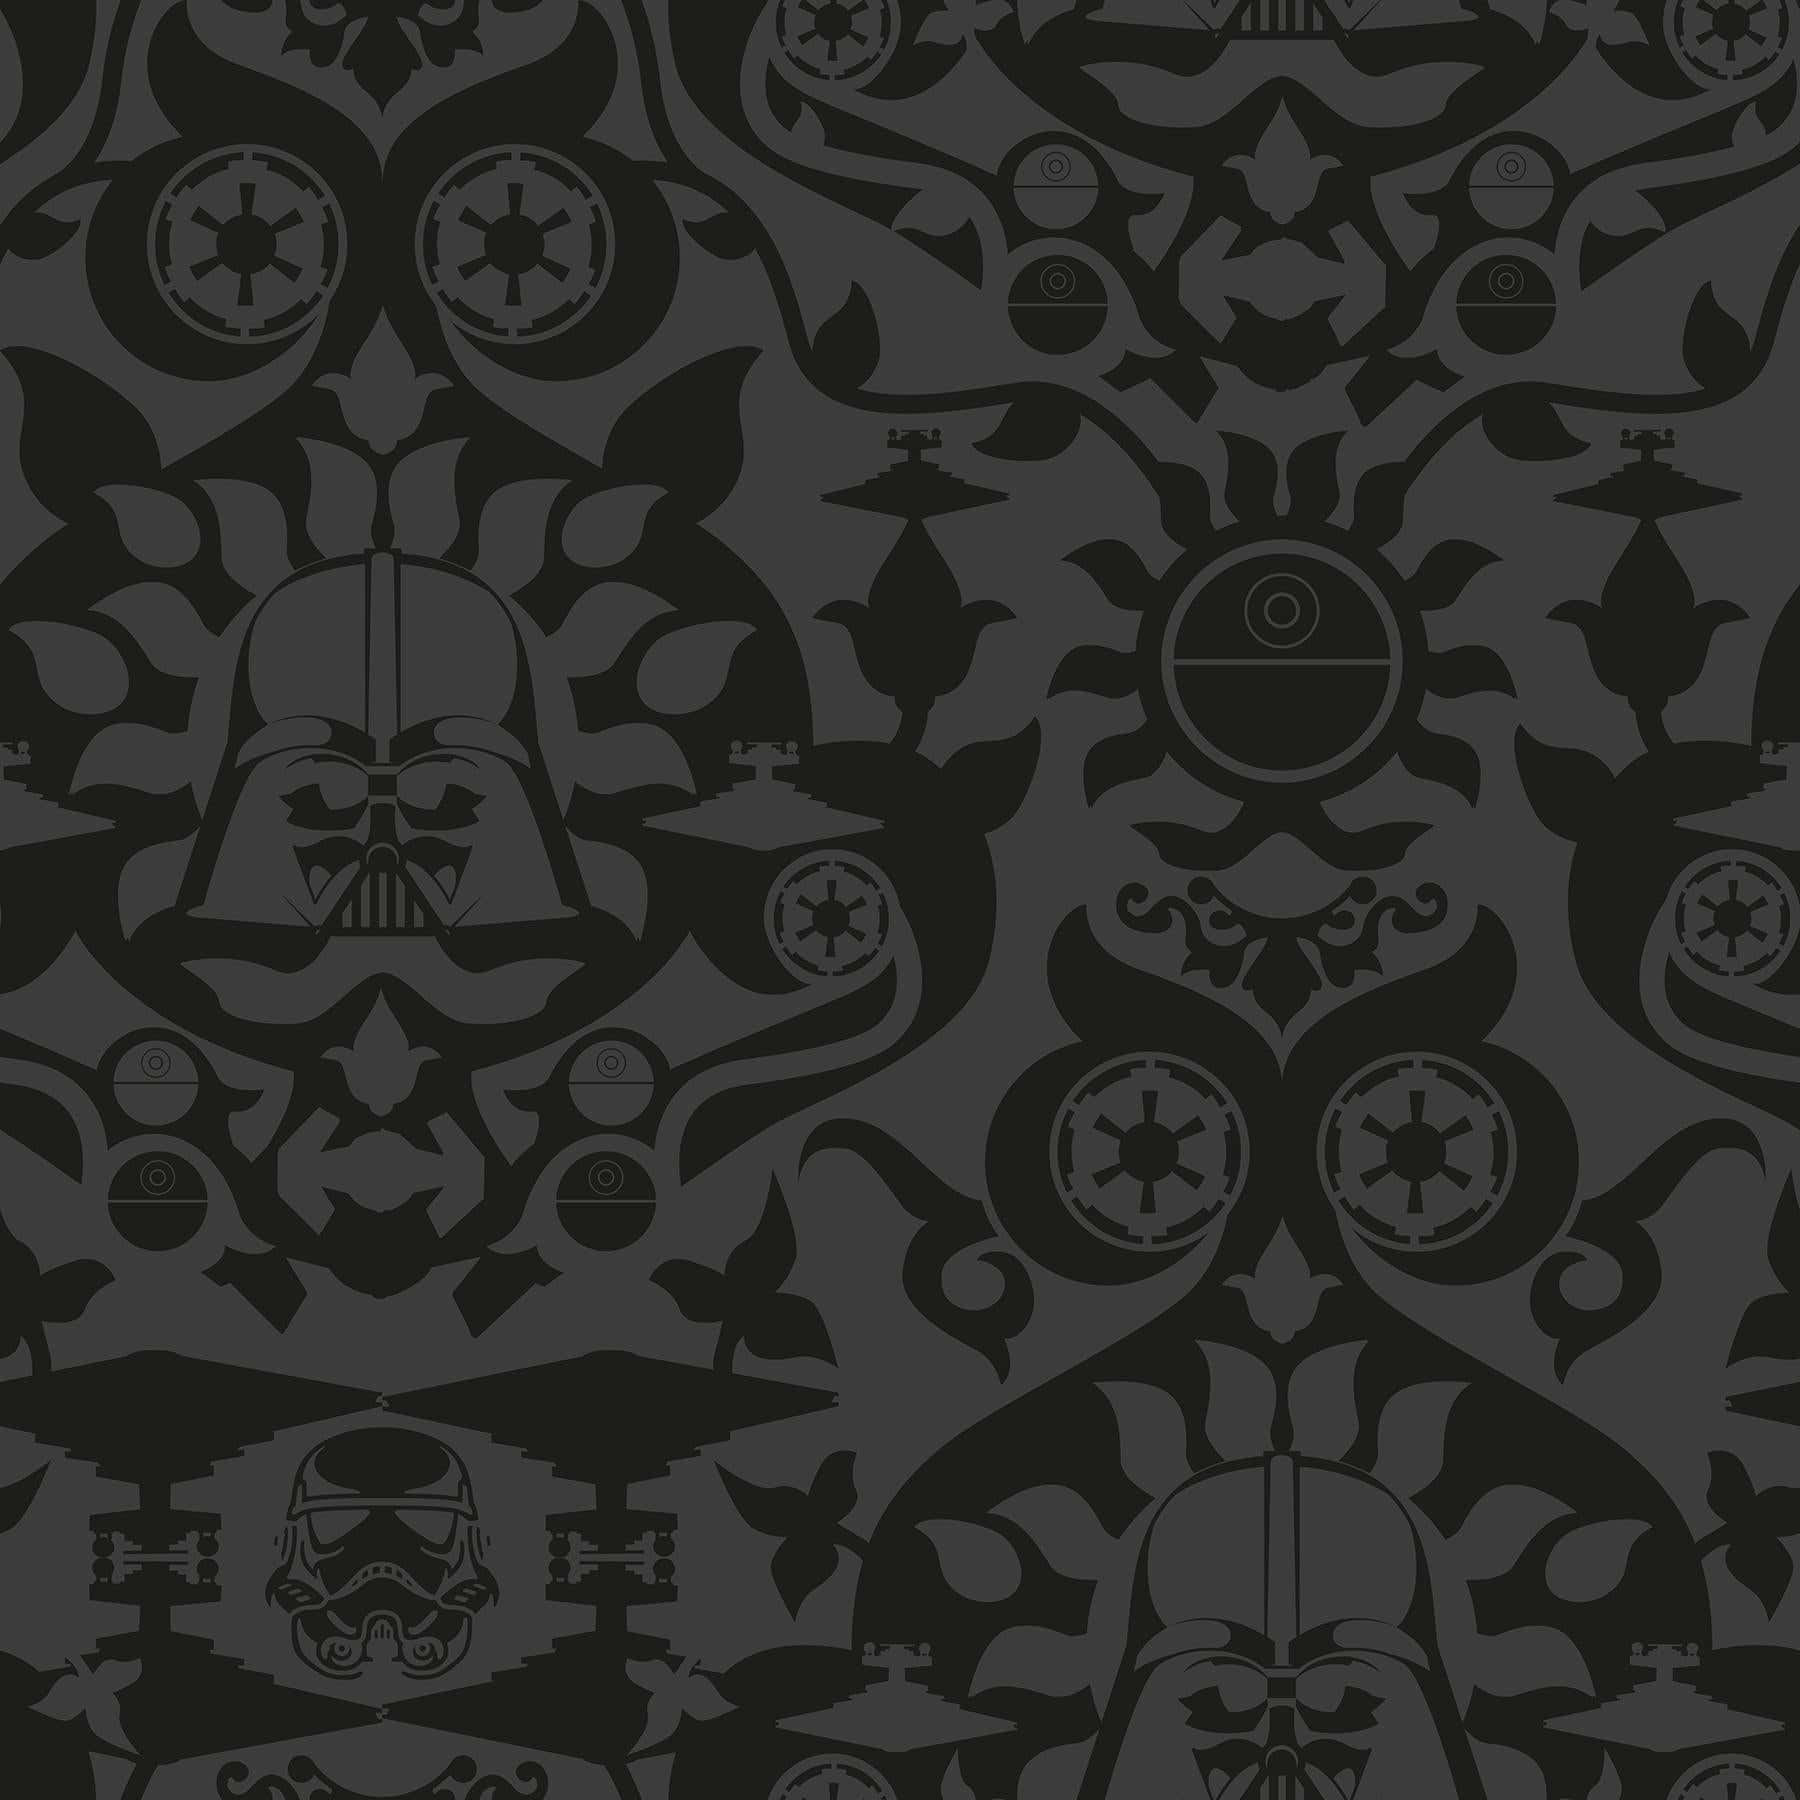 Star Wars Inspired Damask Pattern Wallpaper